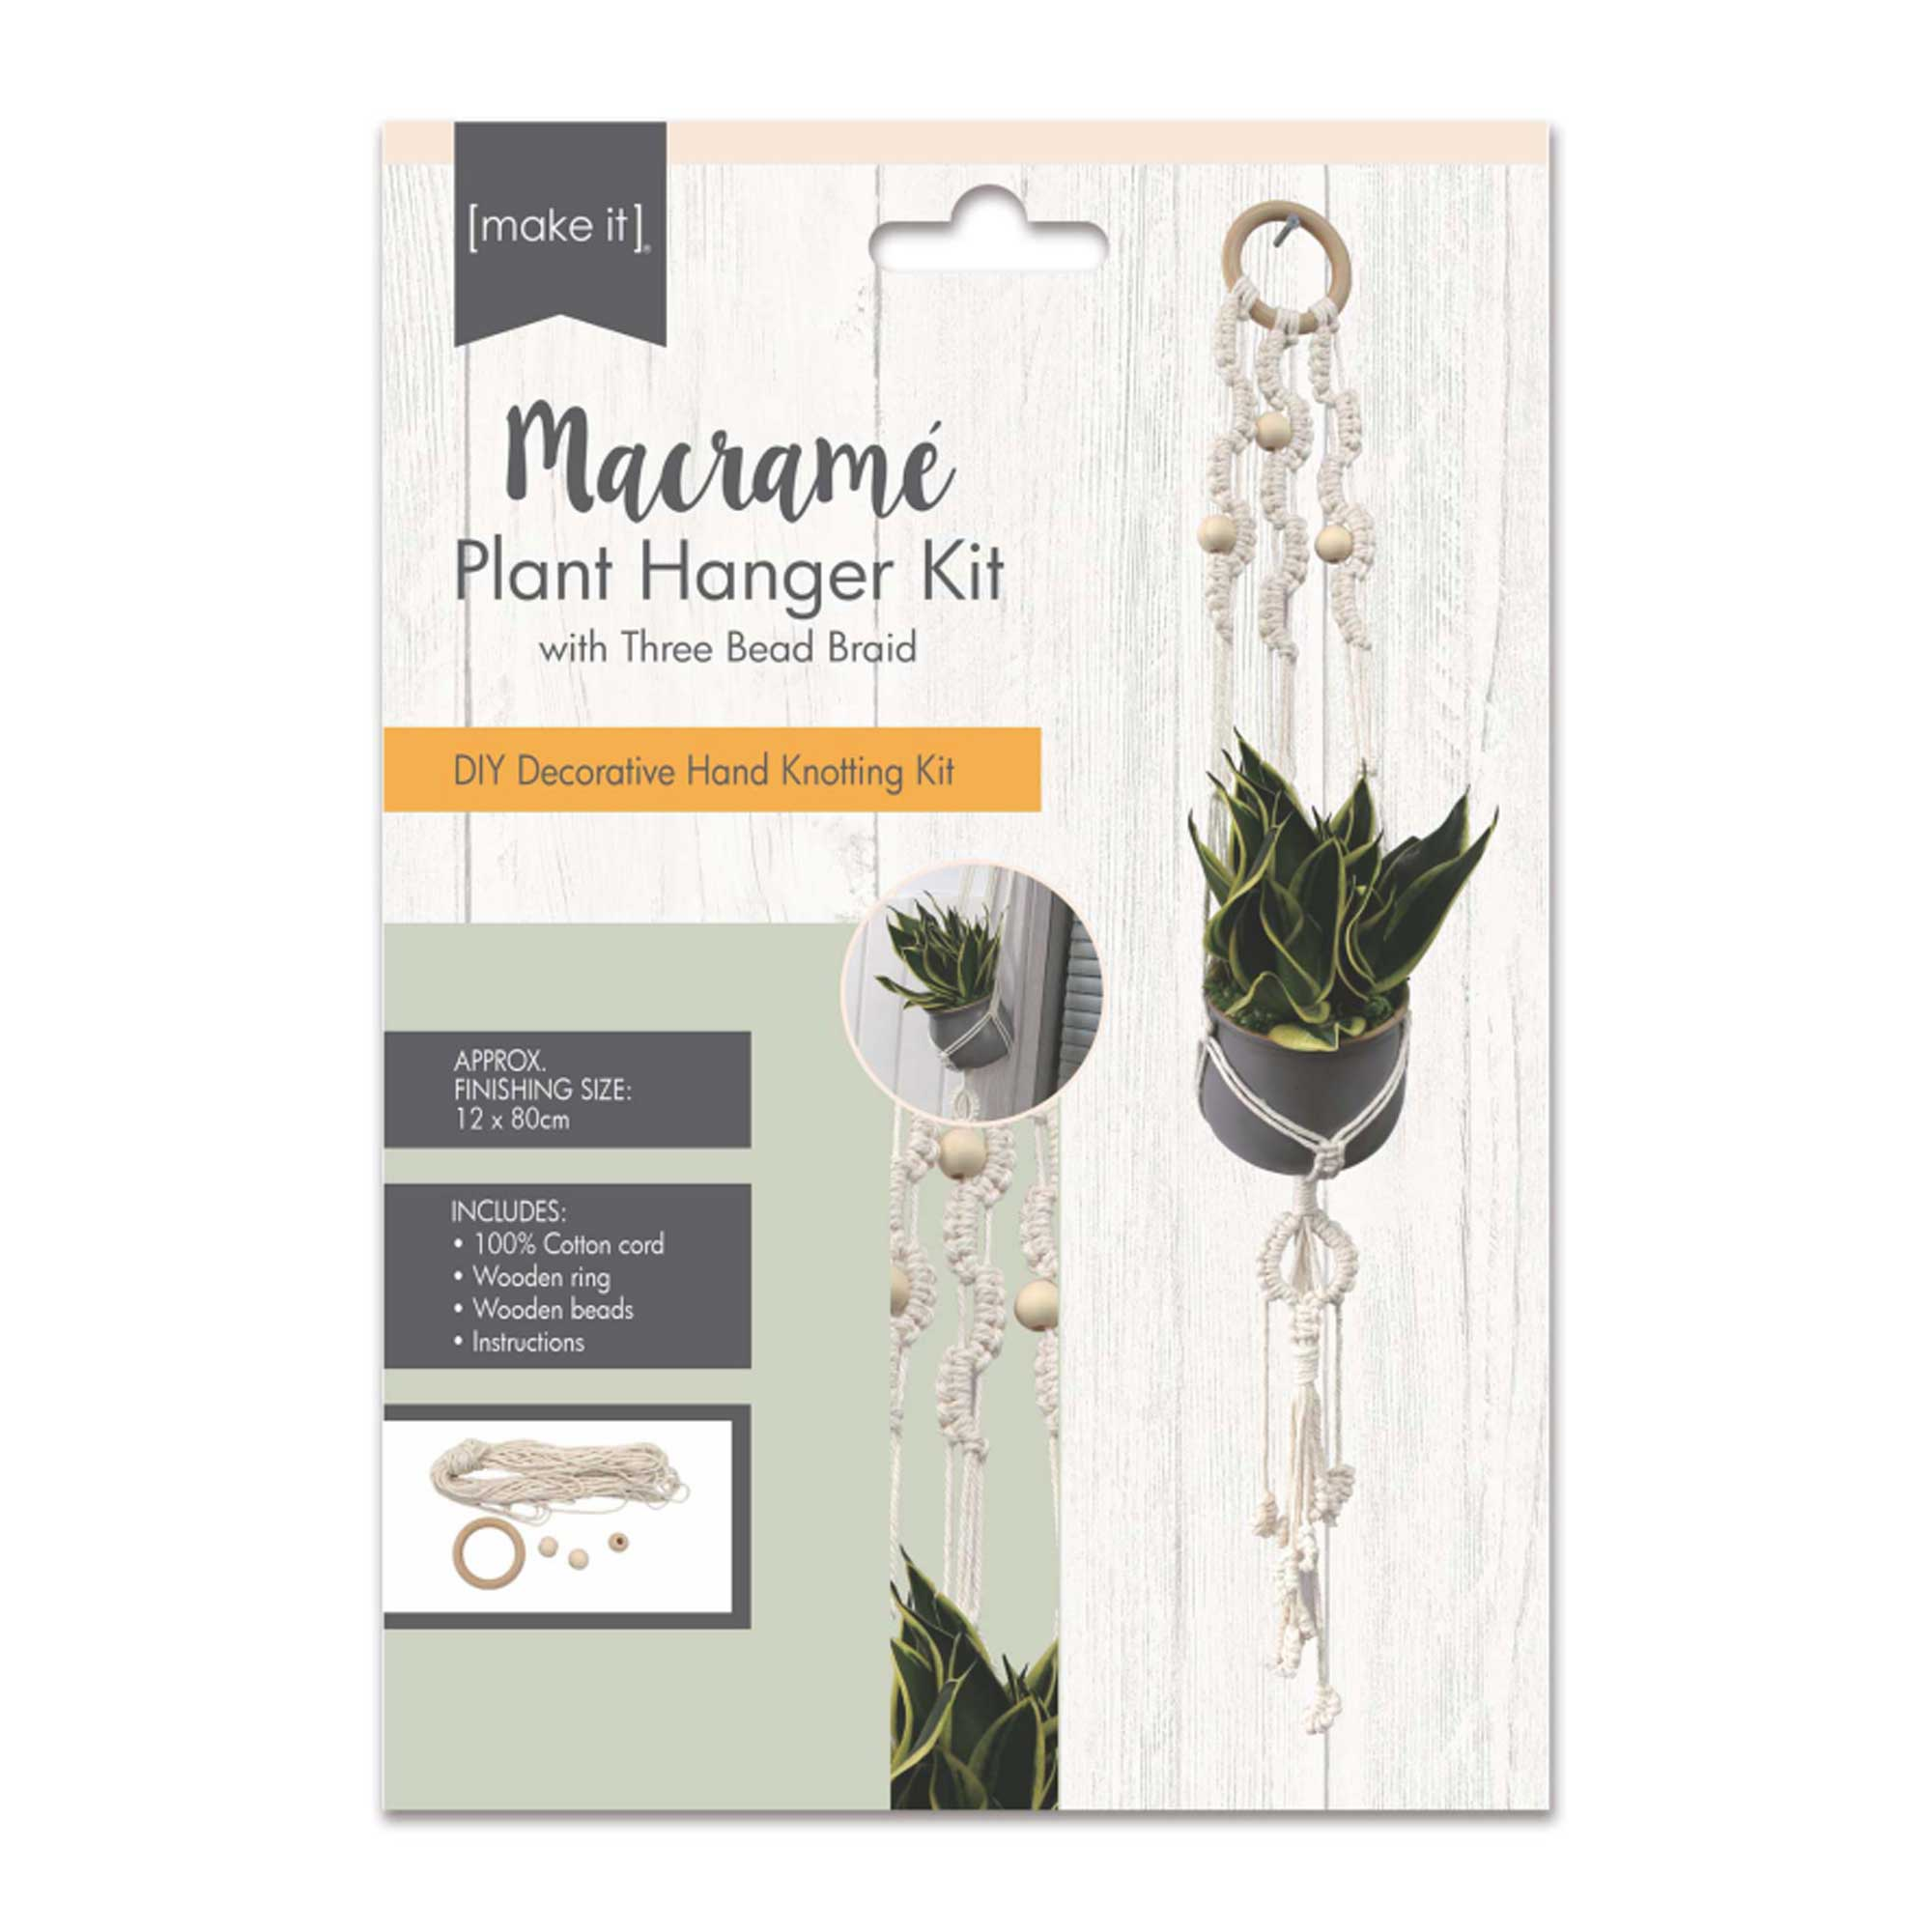 Macrame Plant Hanger Kit - 3 Bead Braid